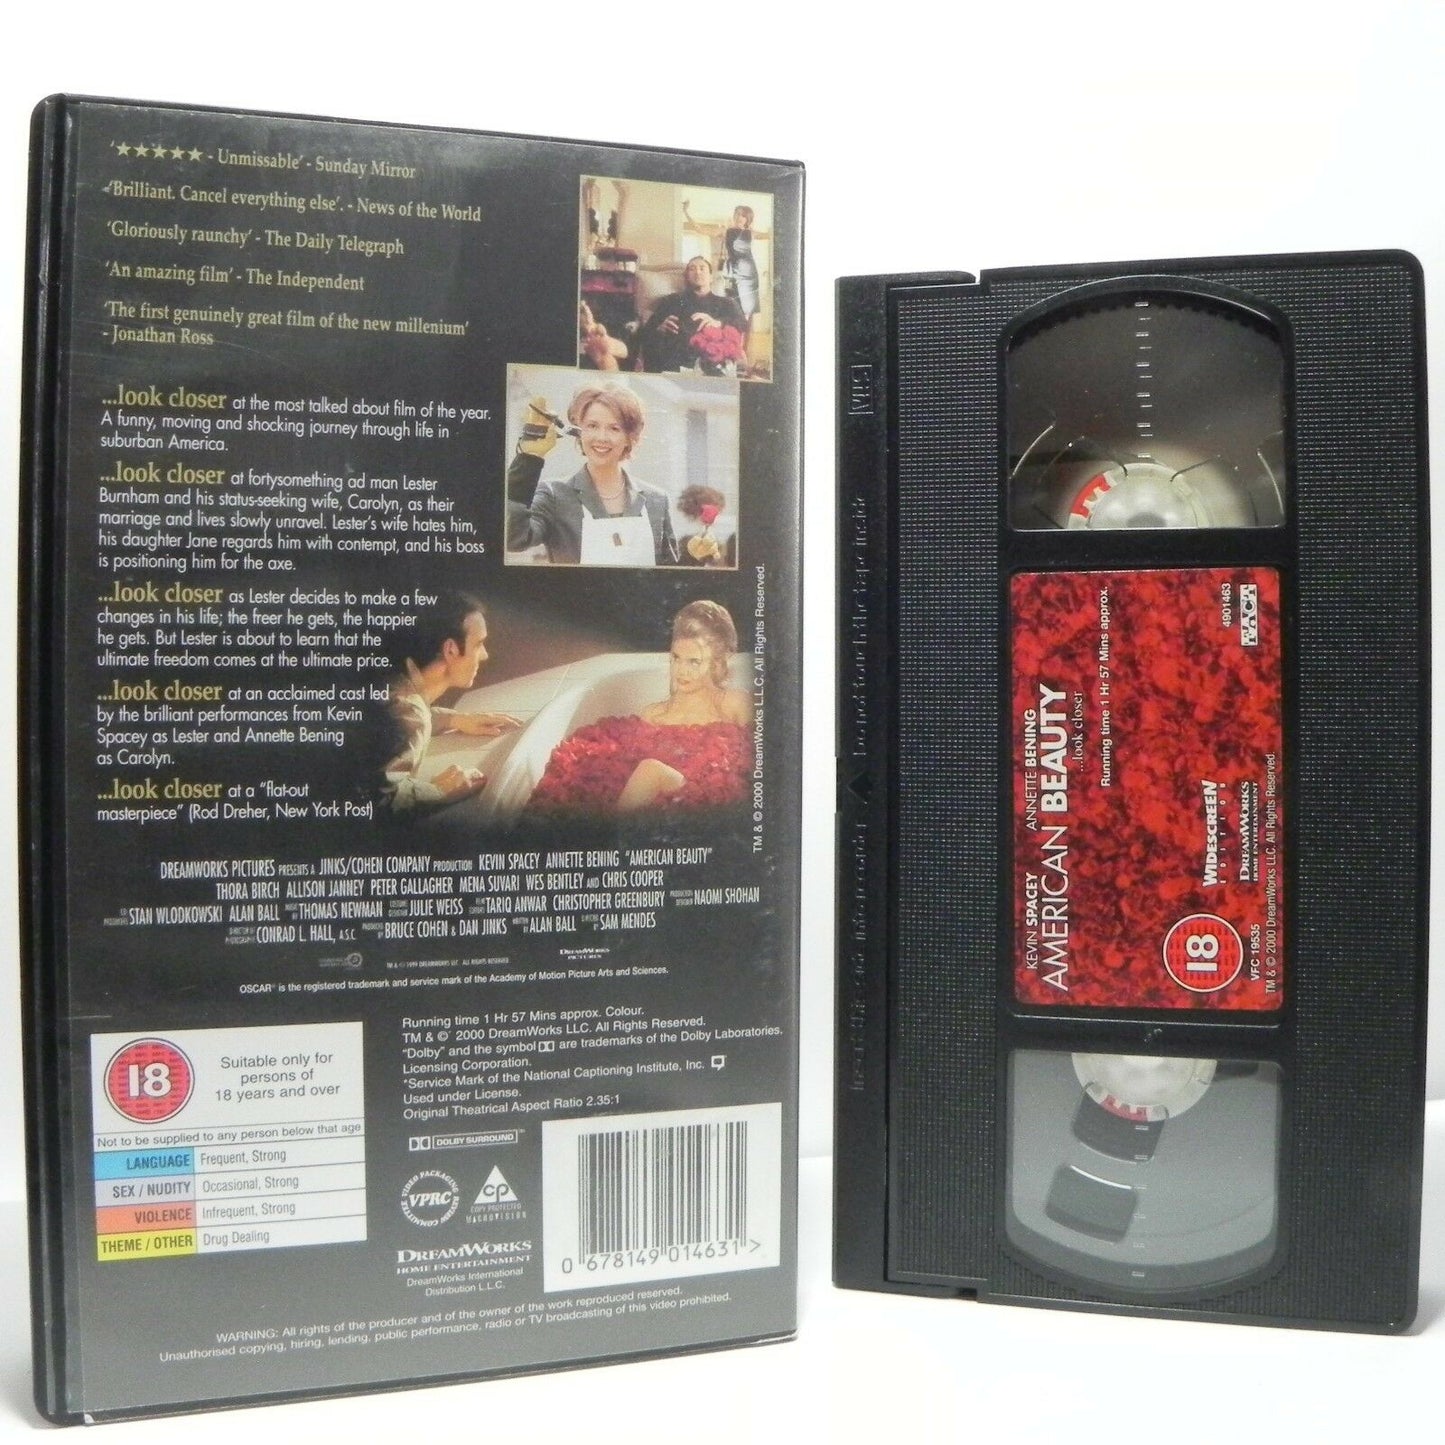 American Beauty - Drama (2000) - Widescreen - 5 Oscar Winner - K.Spacey - VHS-